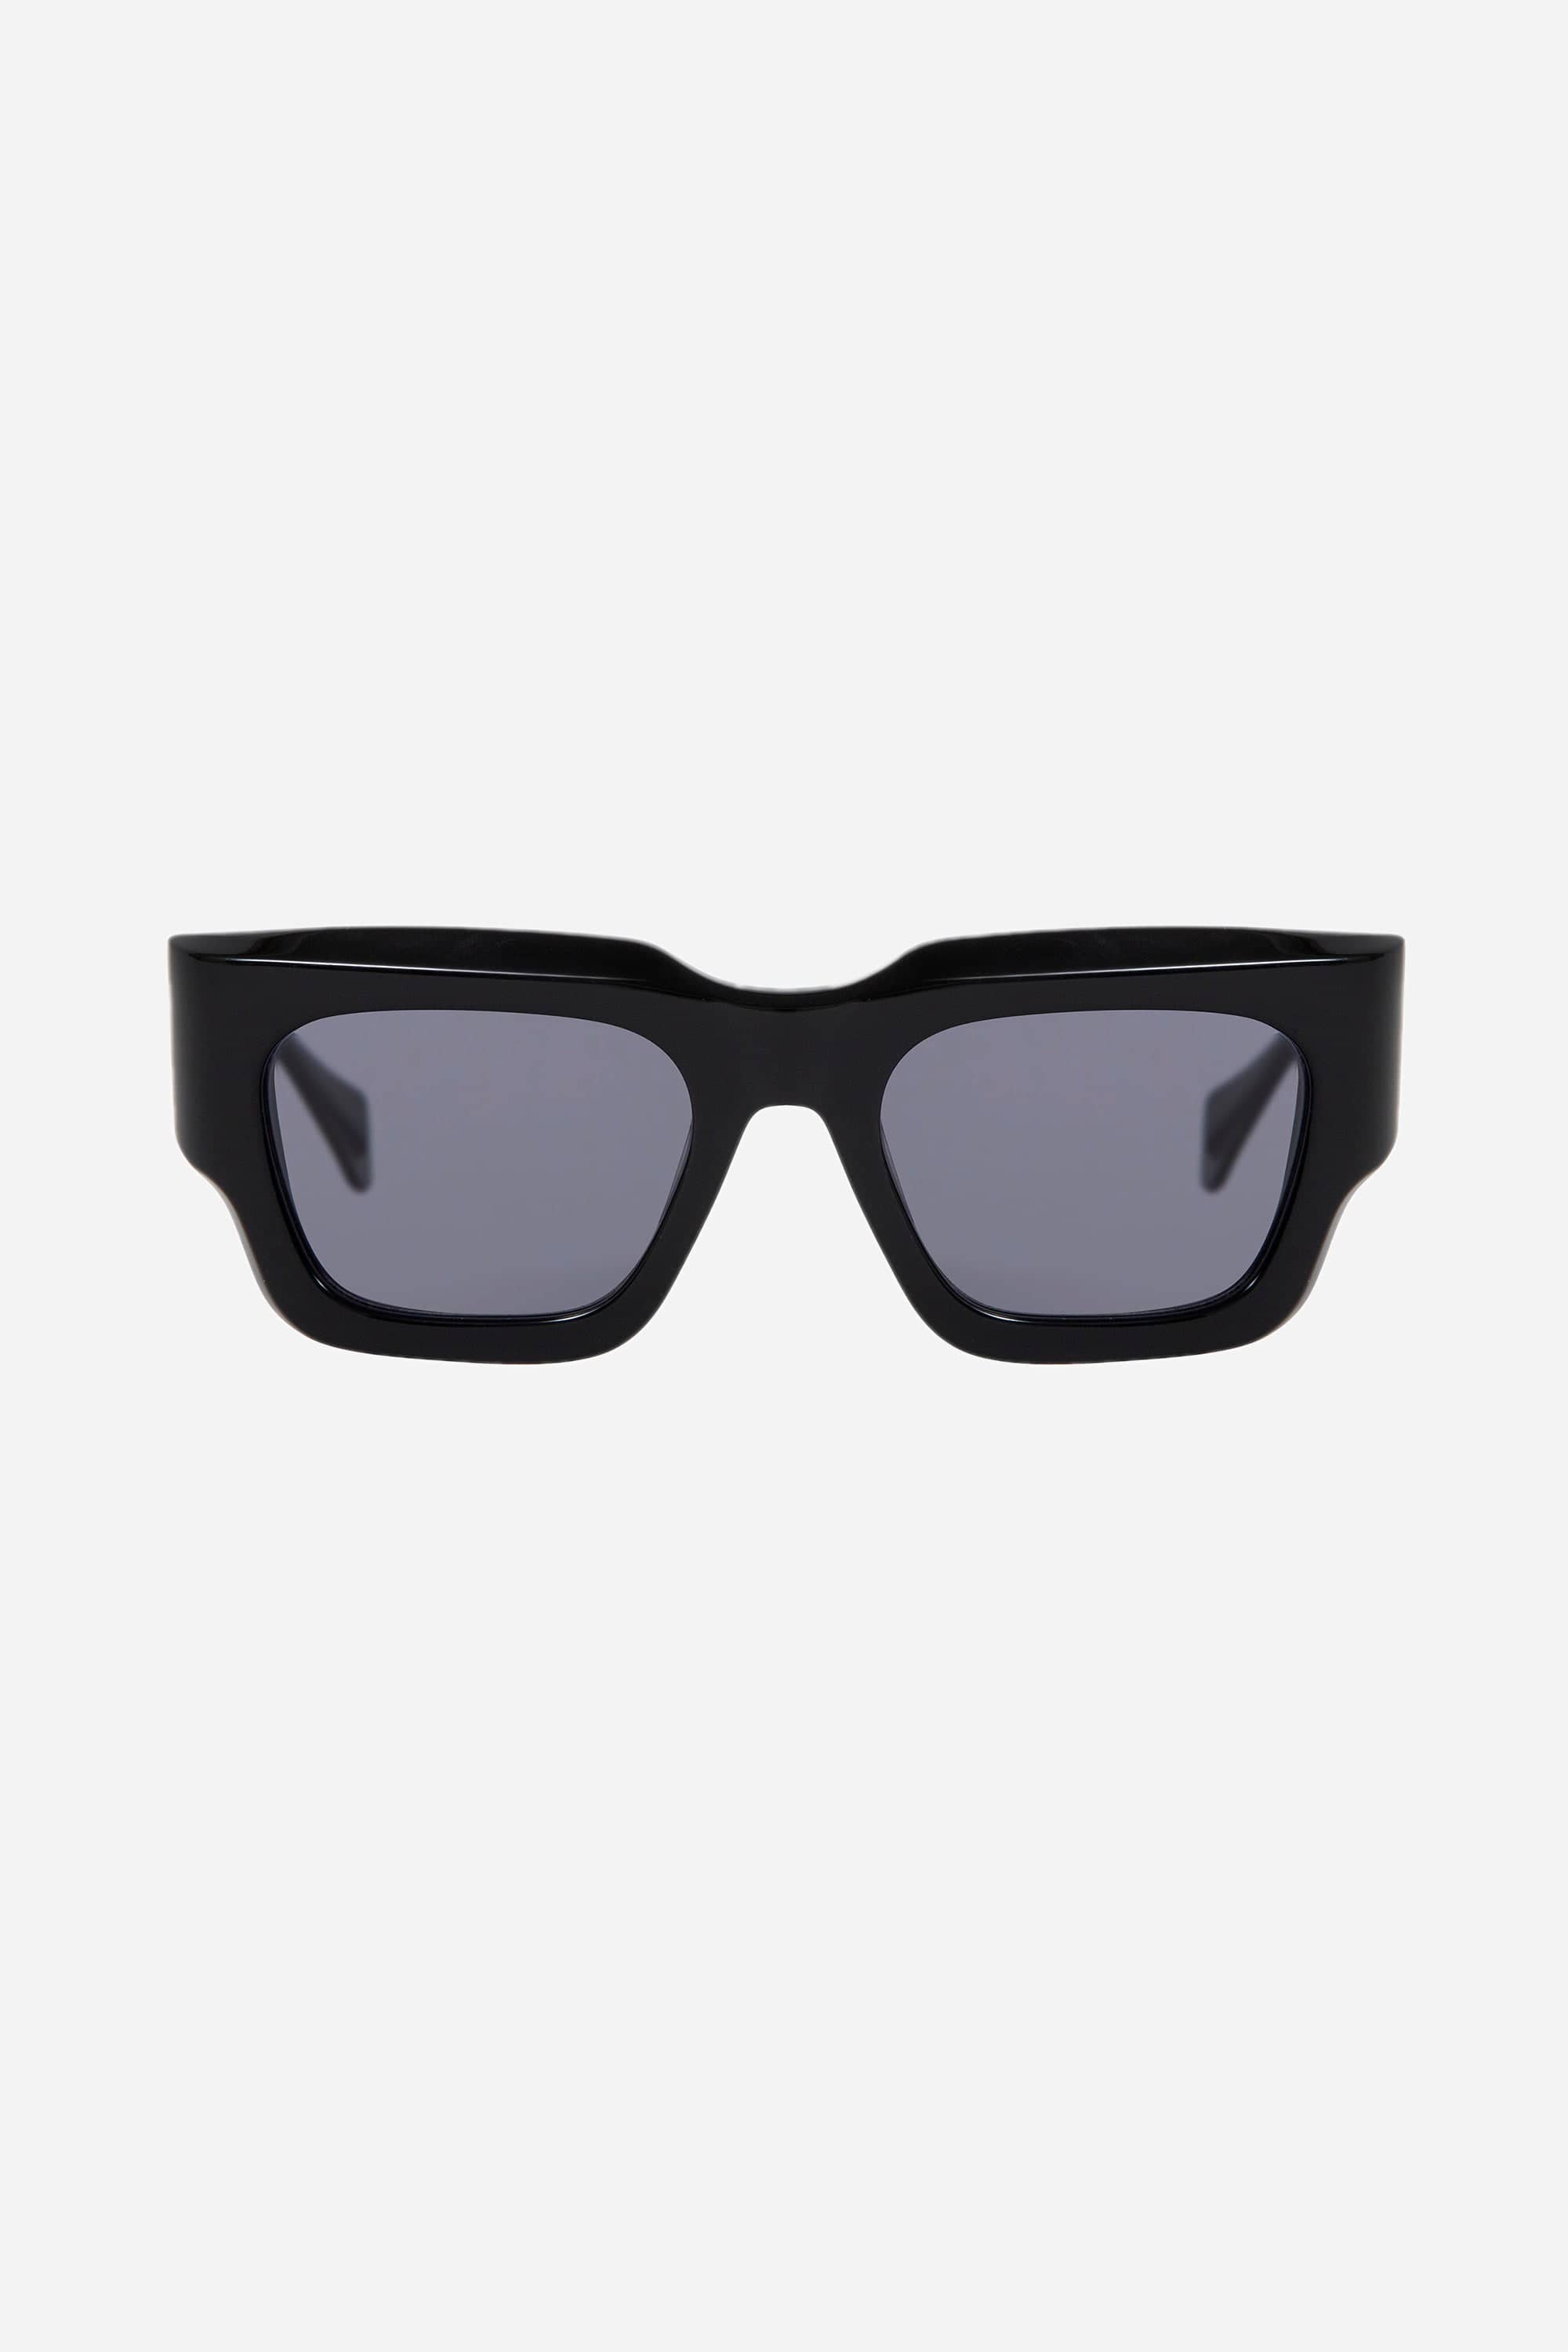 Gigi Studios black squared bold sunglasses - Eyewear Club